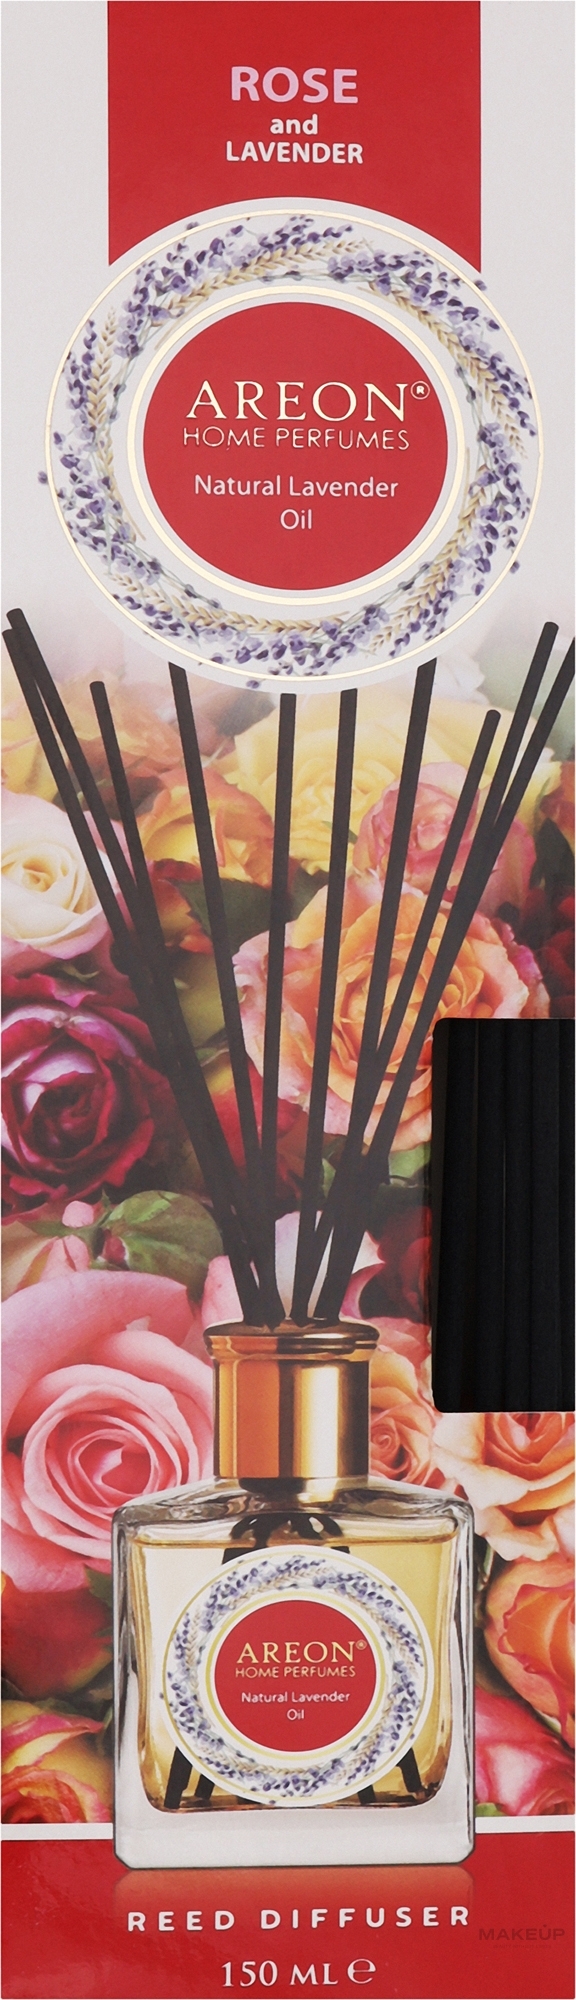 Dyfuzor zapachowy Róża i lawenda - Areon Home Perfume Rose & Lavender Oil Reed Diffuser — Zdjęcie 150 ml